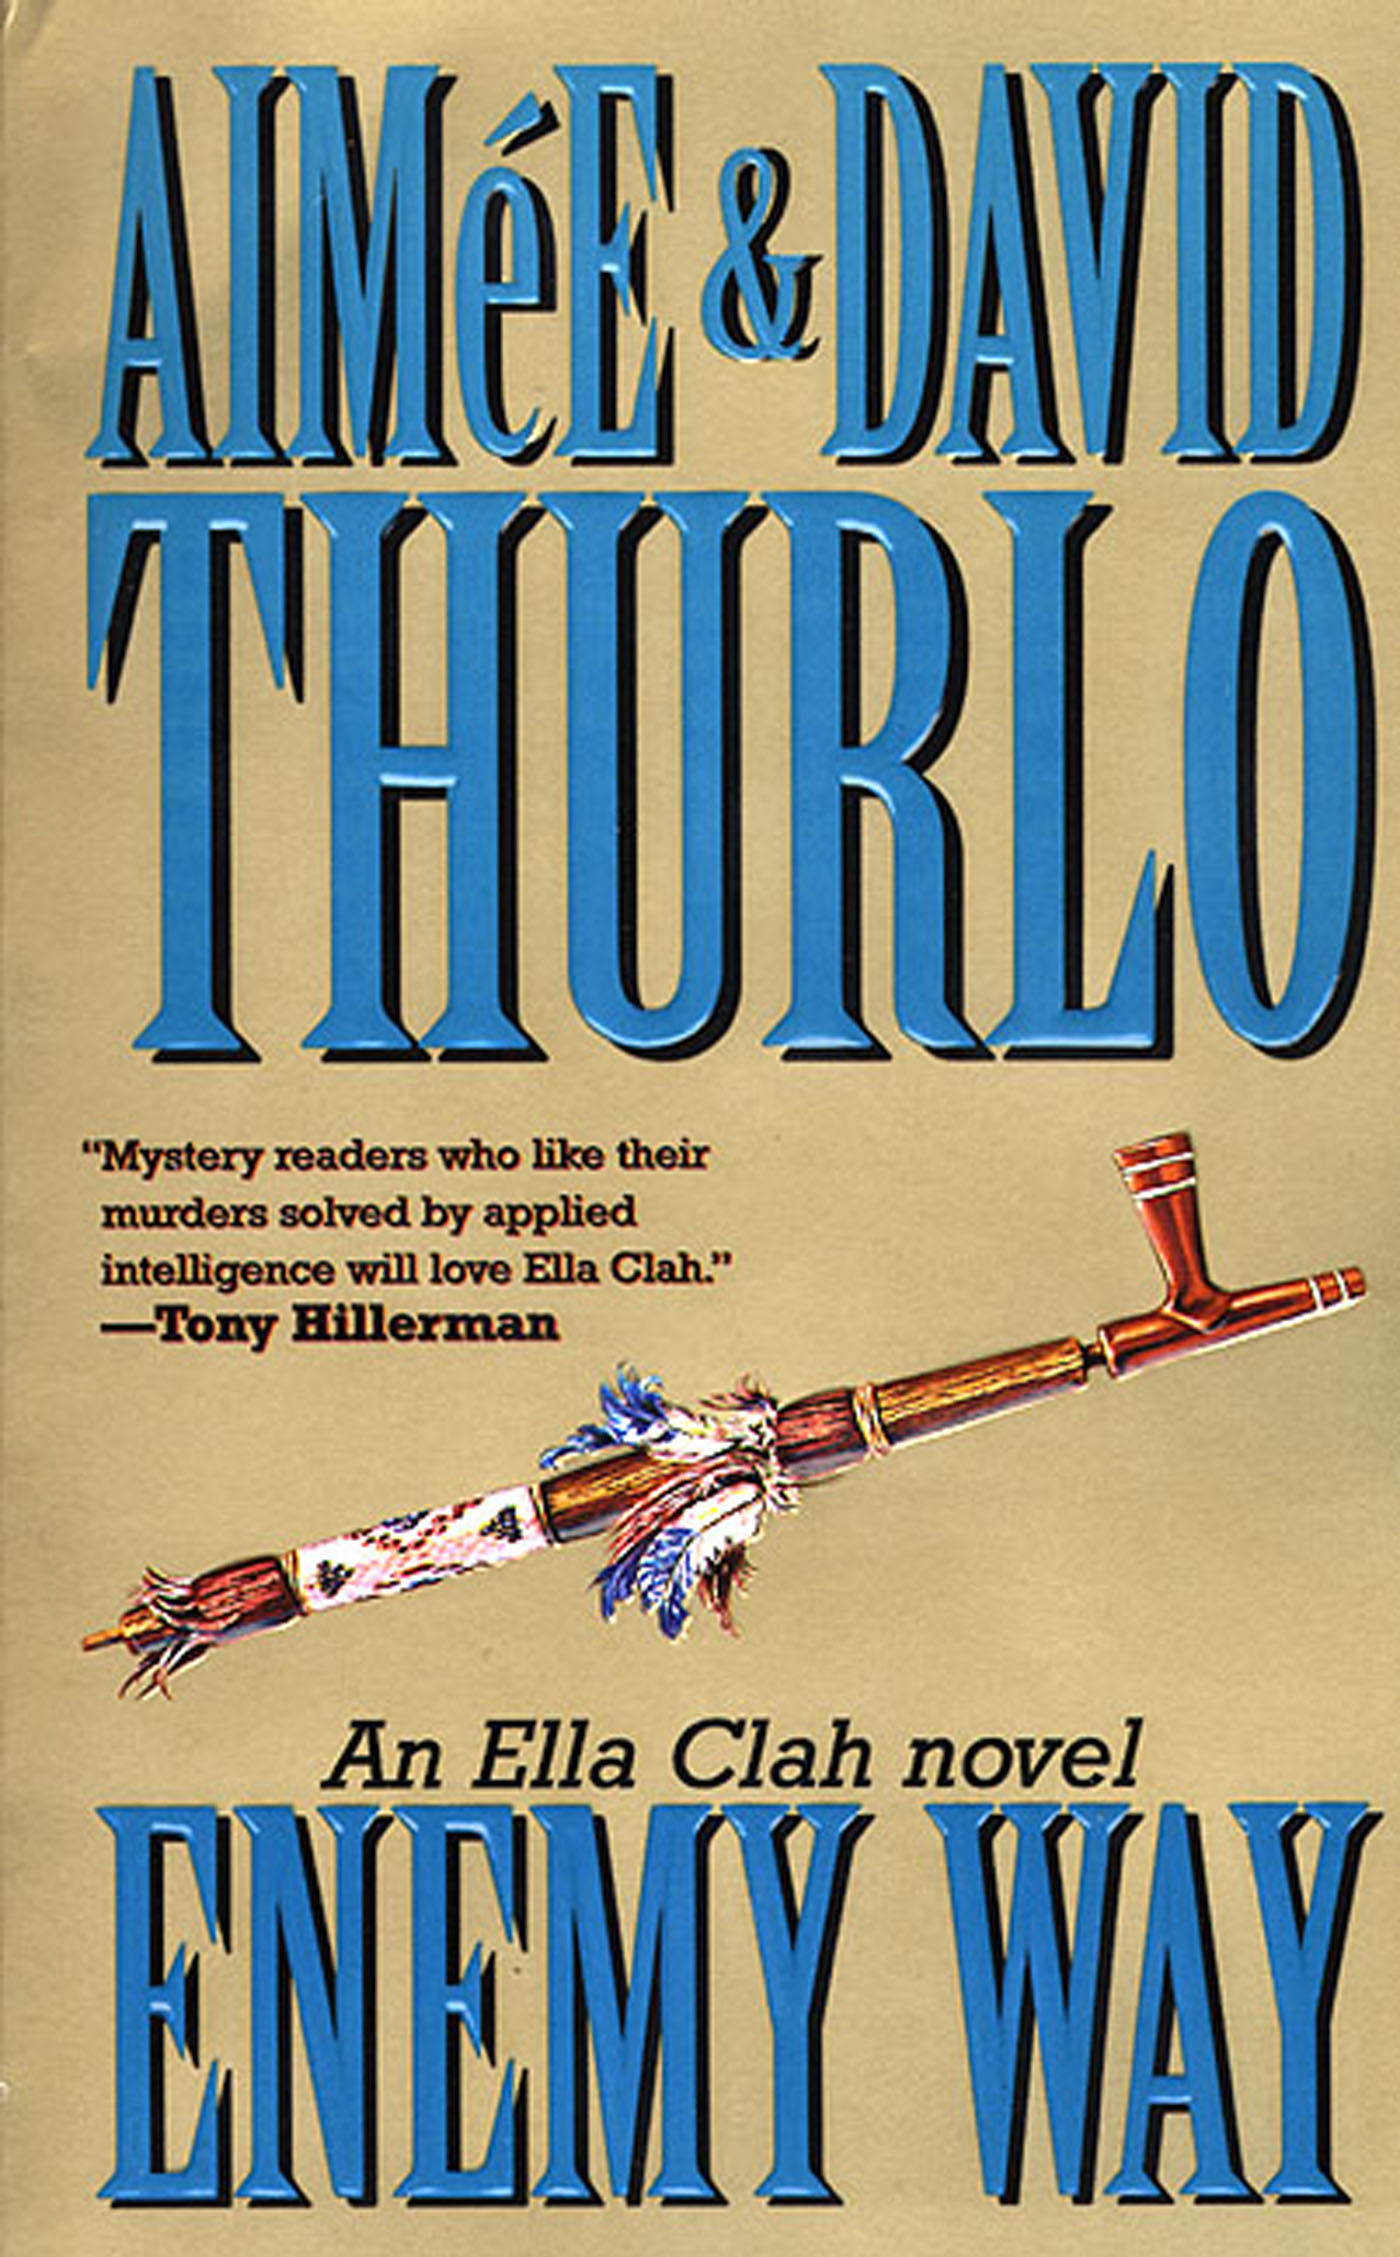 The Enemy Way : An Ella Clah Novel by Aimée Thurlo, David Thurlo